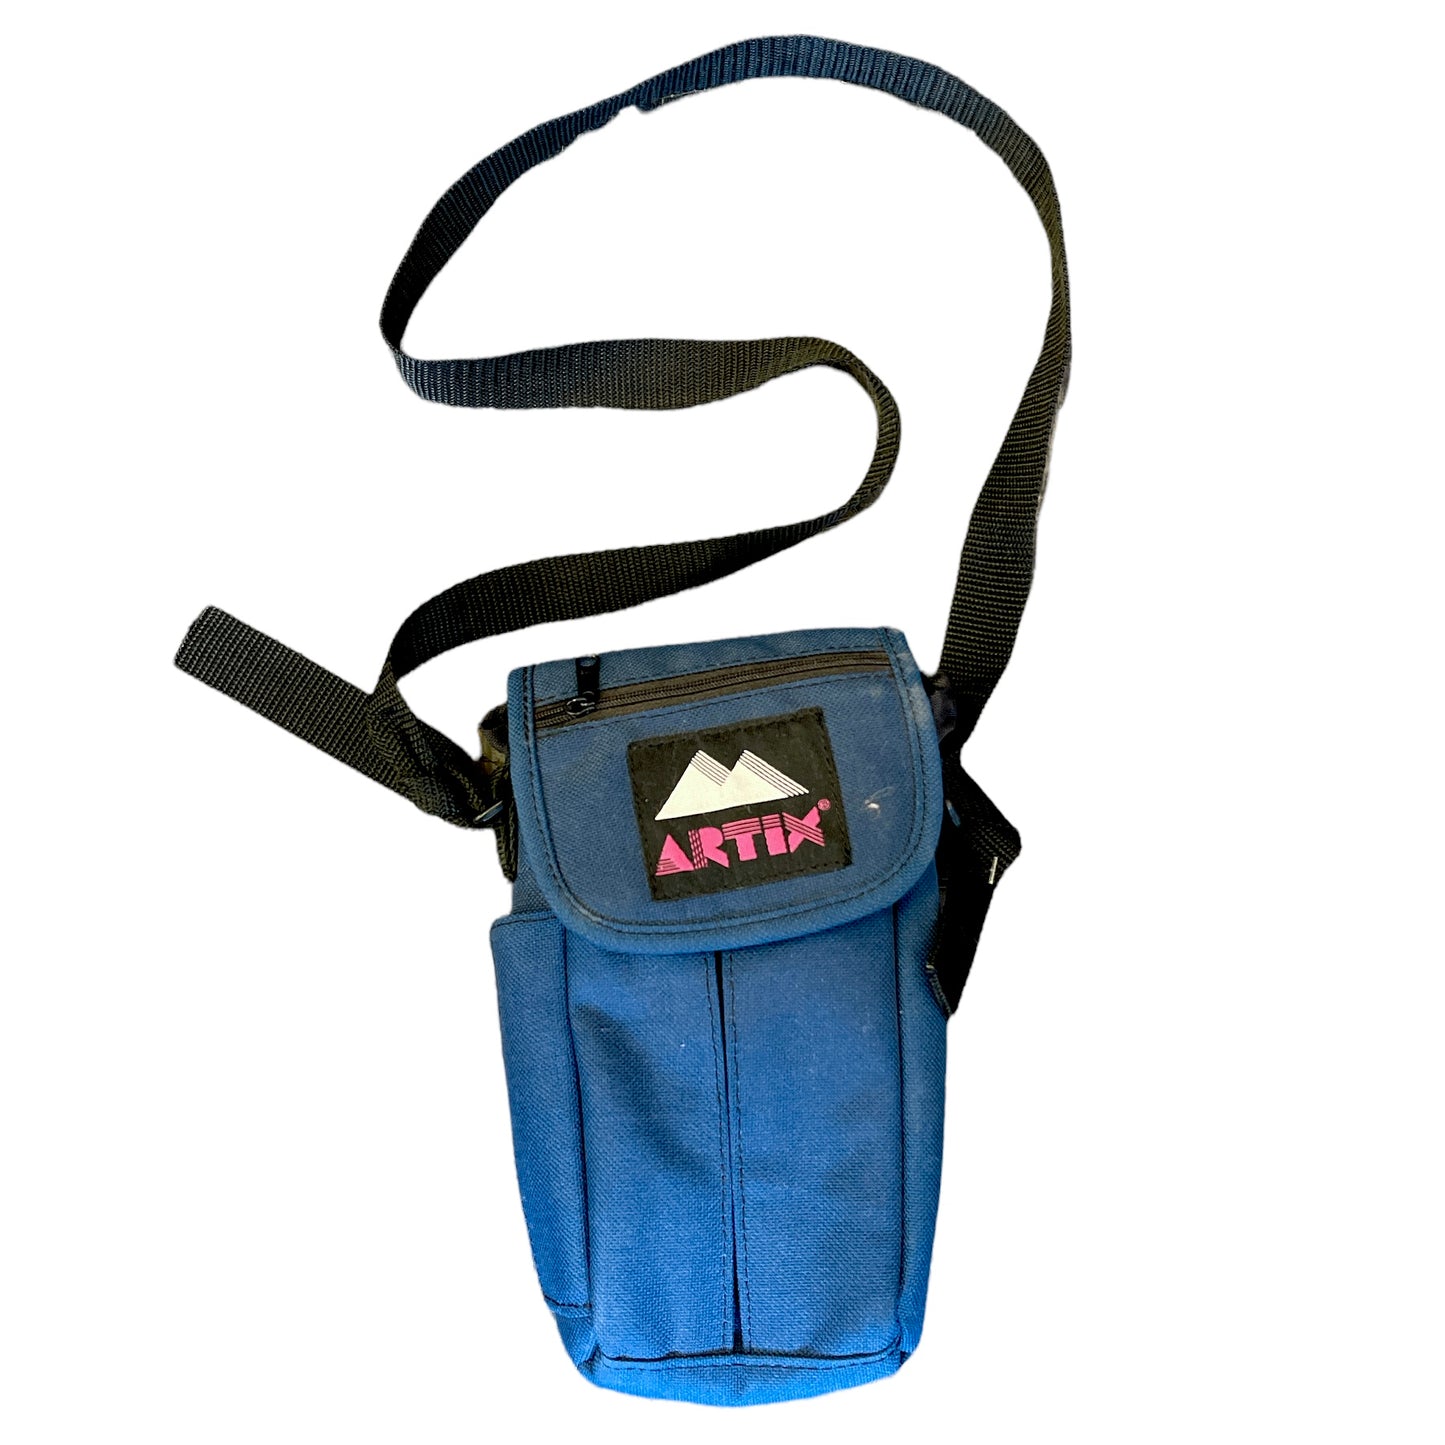 1980s Artix Small Camera Crossbody Bag